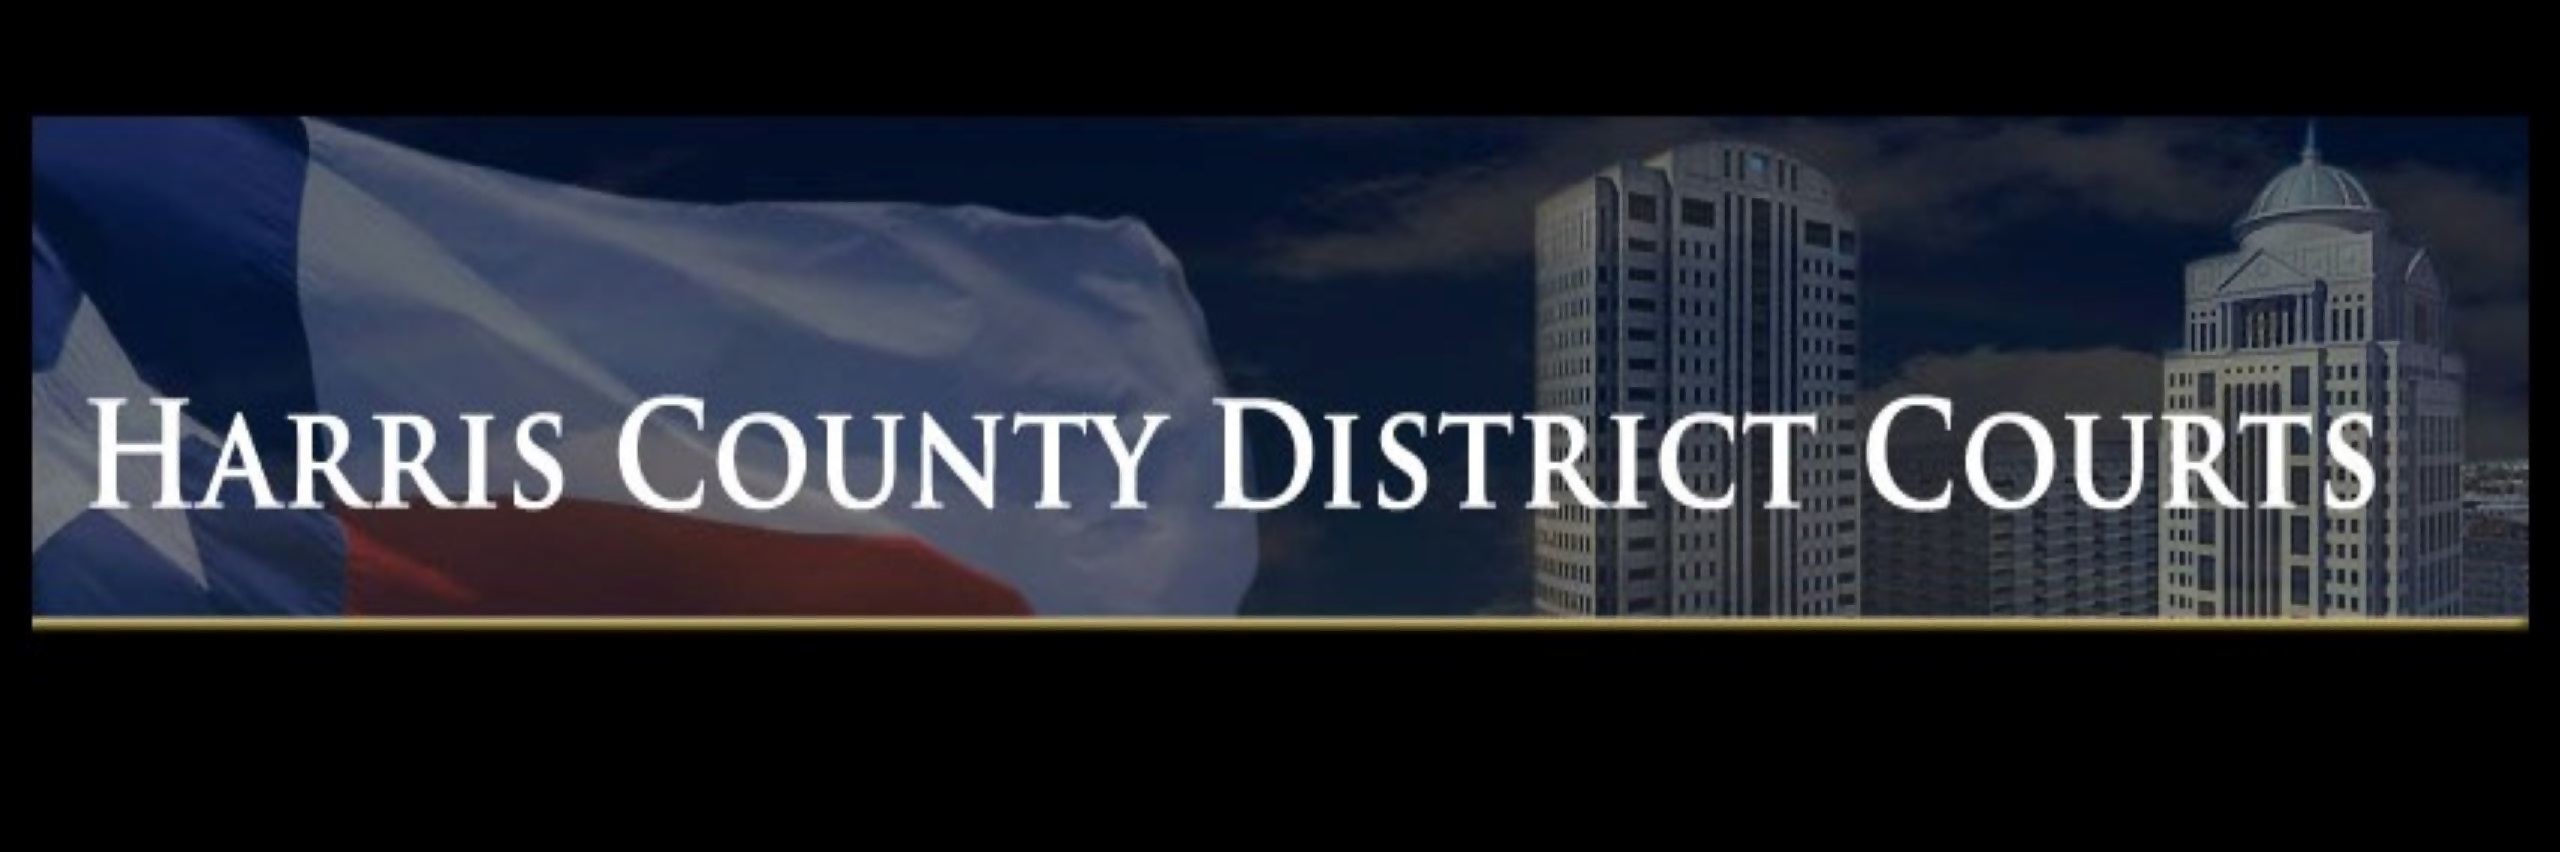 228th District Court - Live Stream